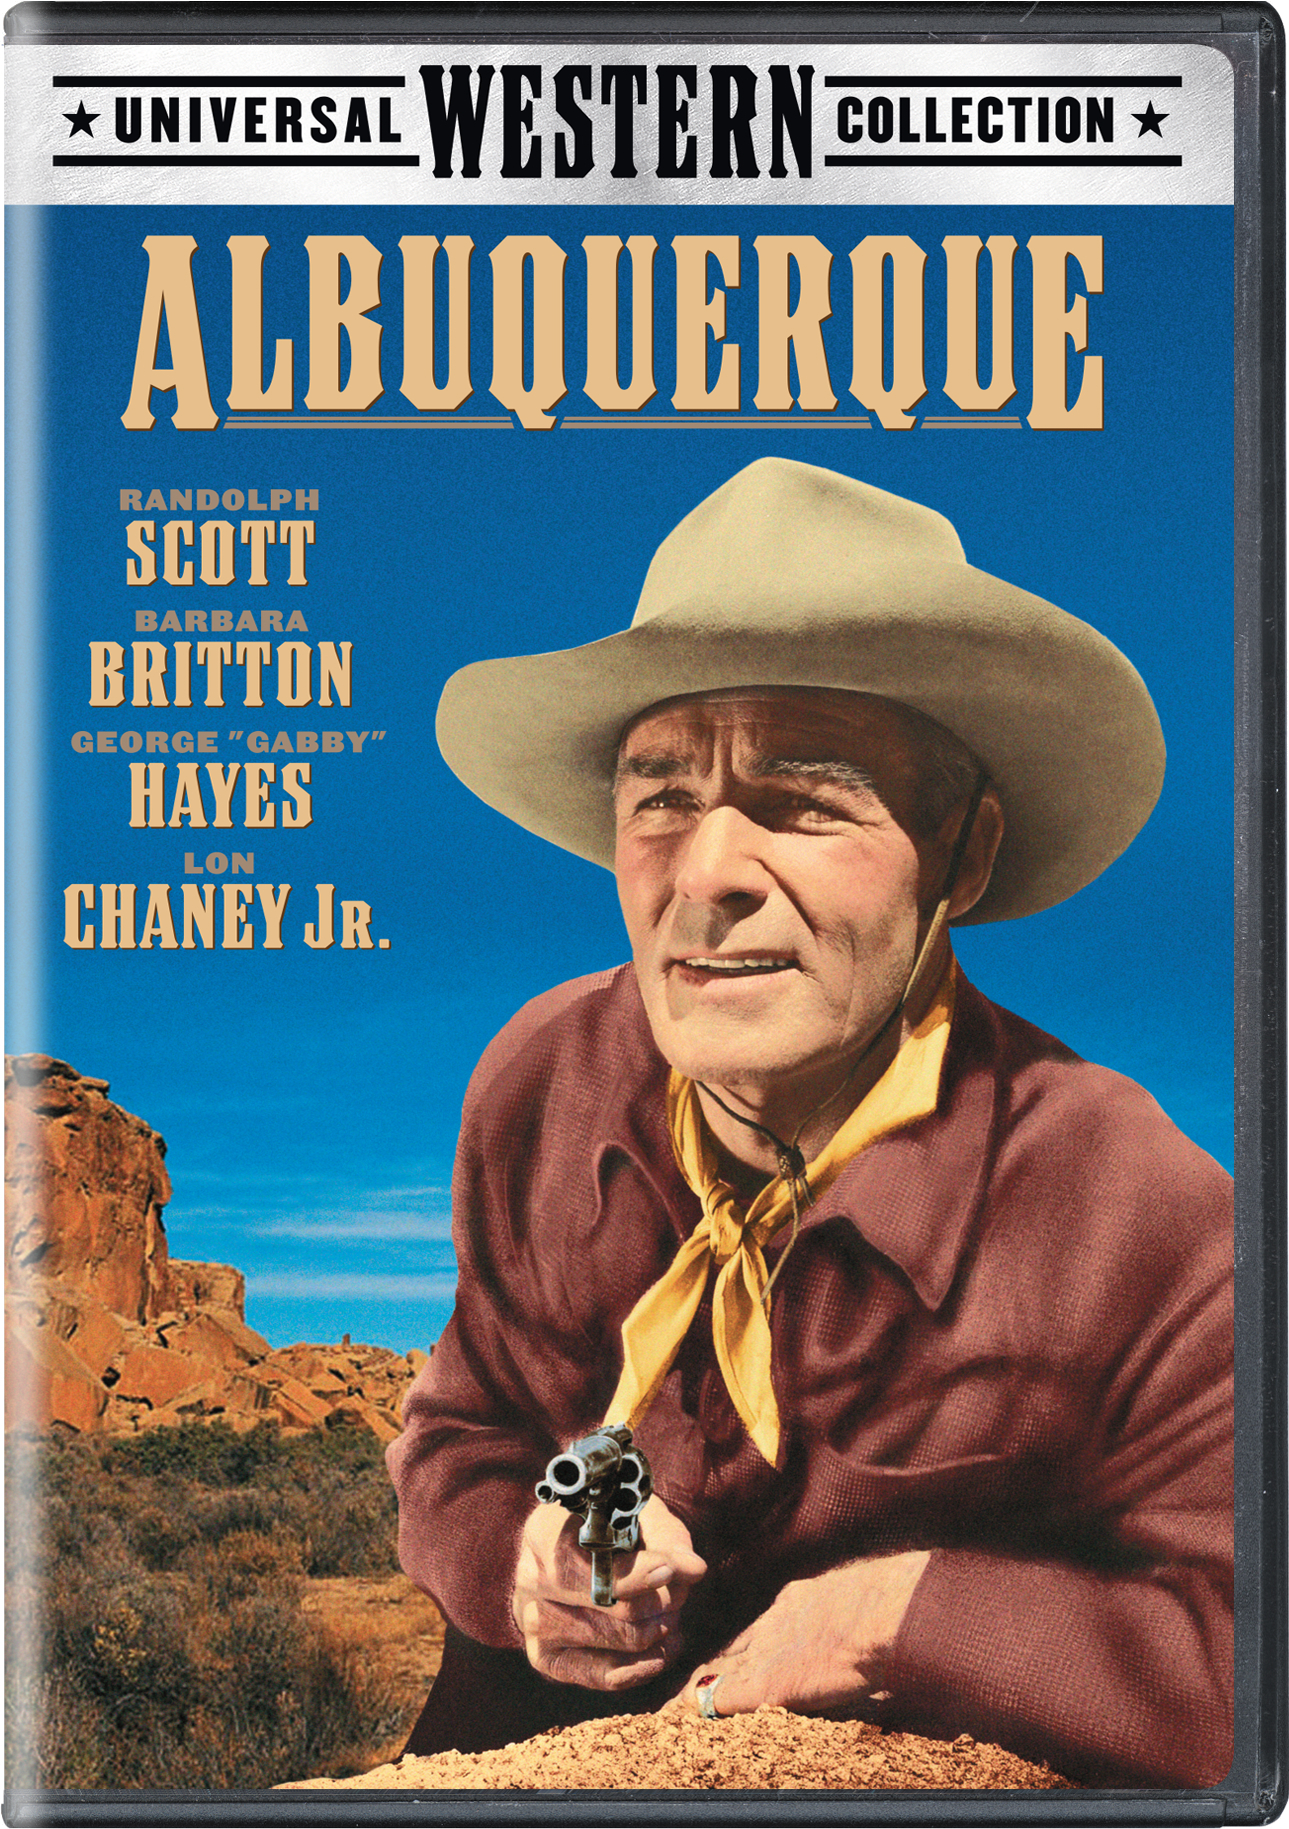 Albuquerque - DVD [ 1948 ]  - Western Movies On DVD - Movies On GRUV